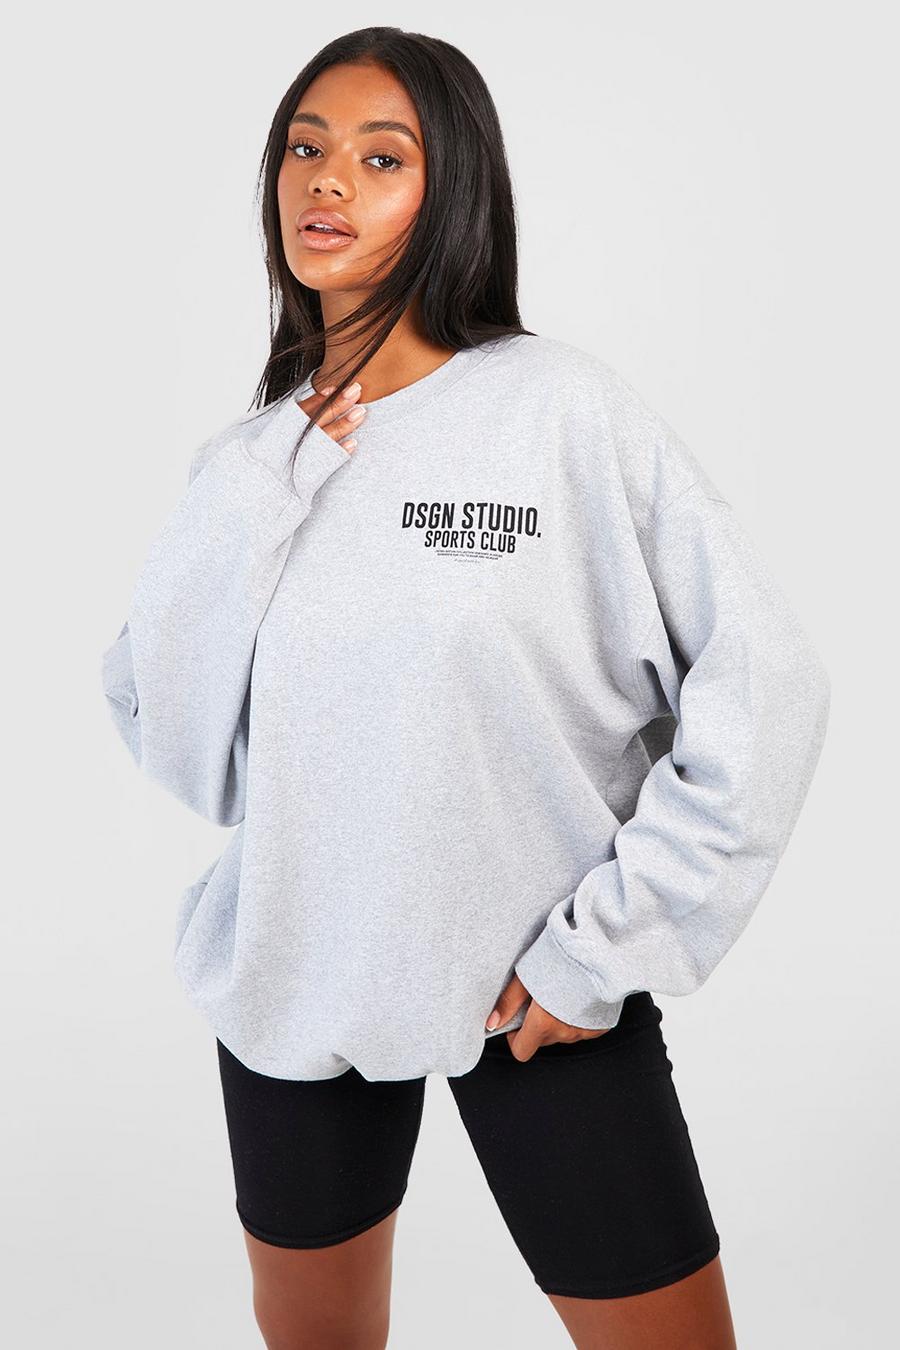 Oversize Sweatshirt mit Dsgn Studio Sports Club Slogan, Grey marl